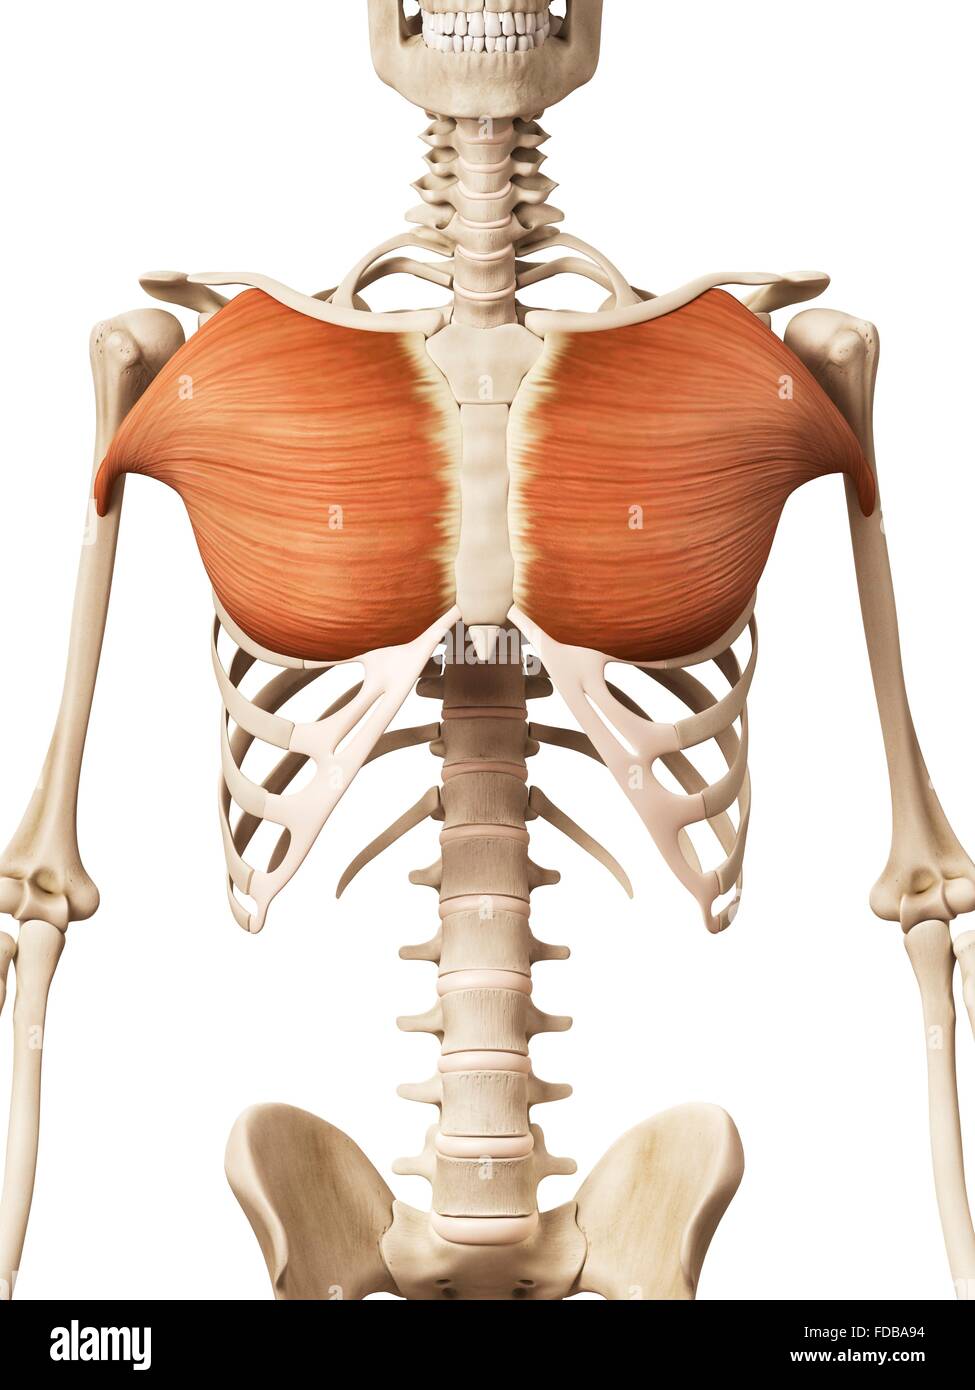 Human Chest Muscles Pectoralis Major Illustration Stock Photo Alamy